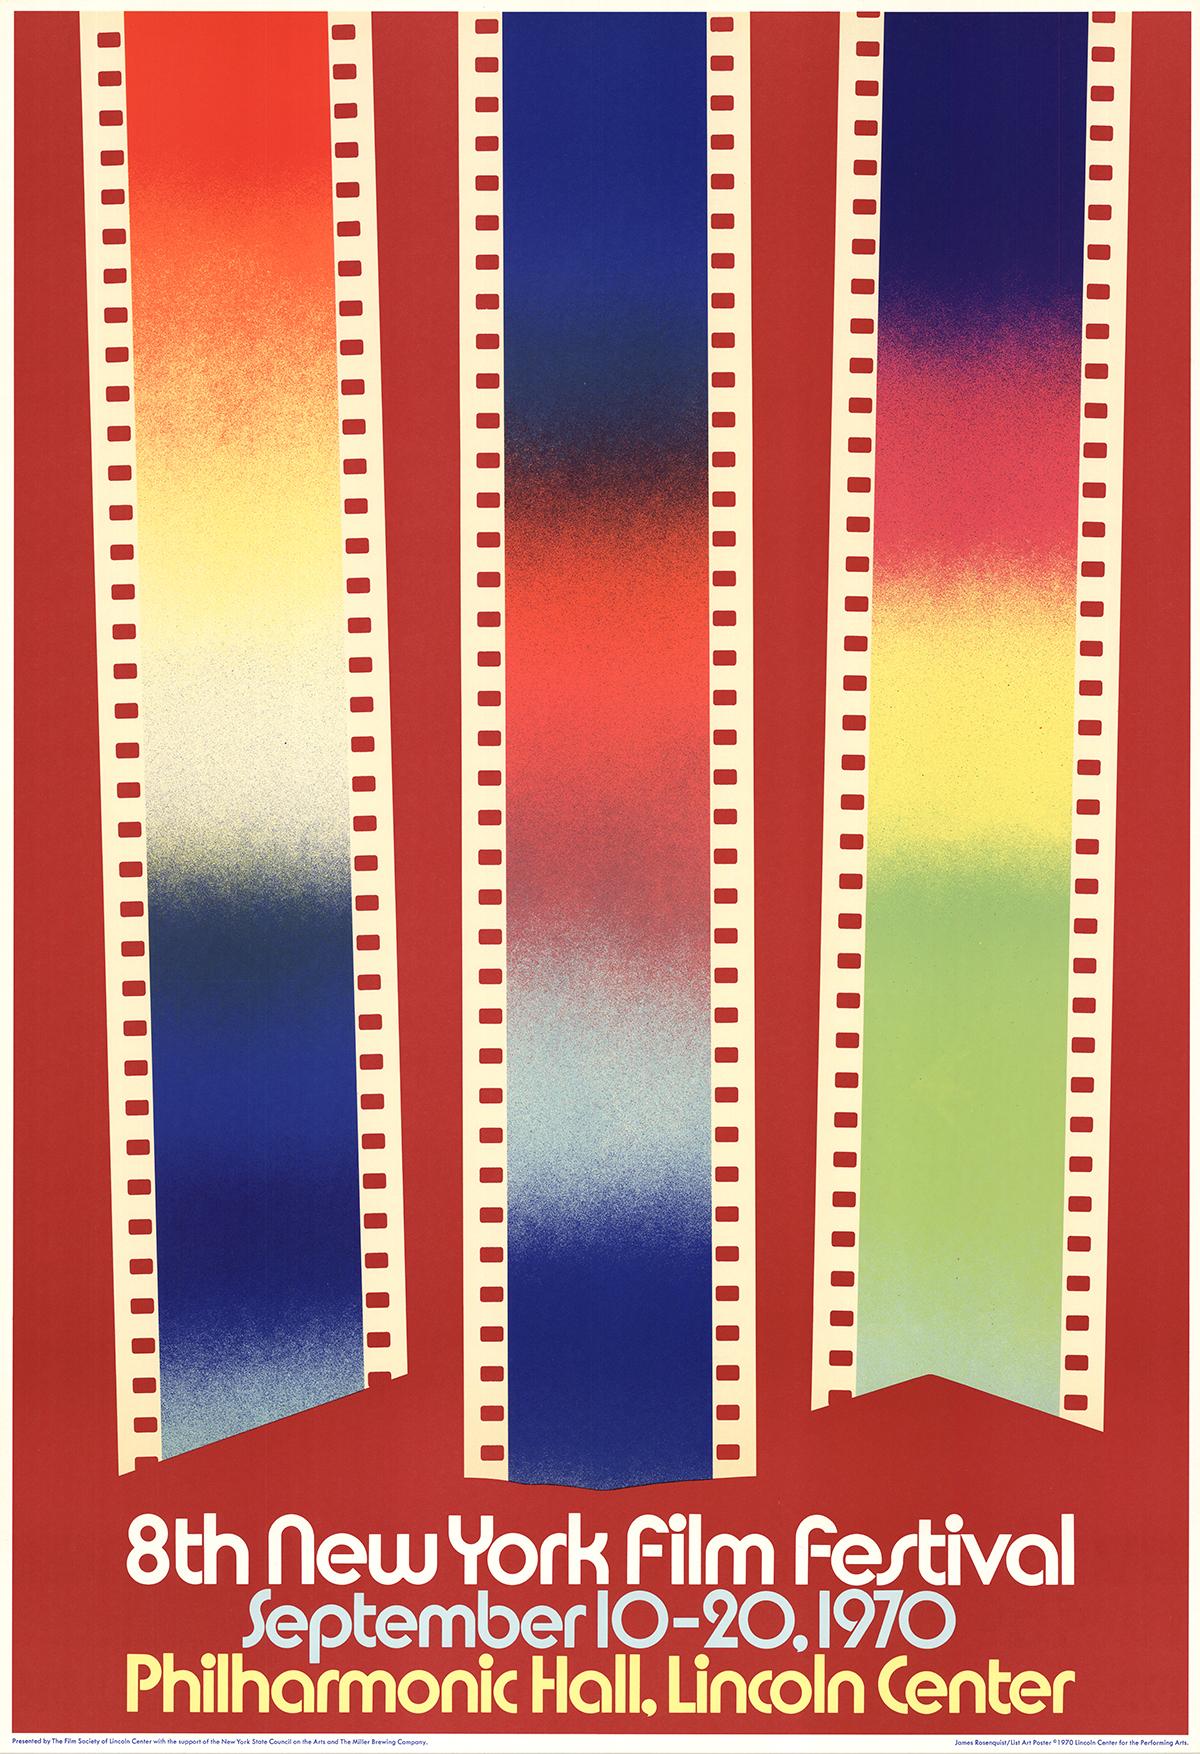 Short Cuts, 8th New York Film Festival - Print by James Rosenquist